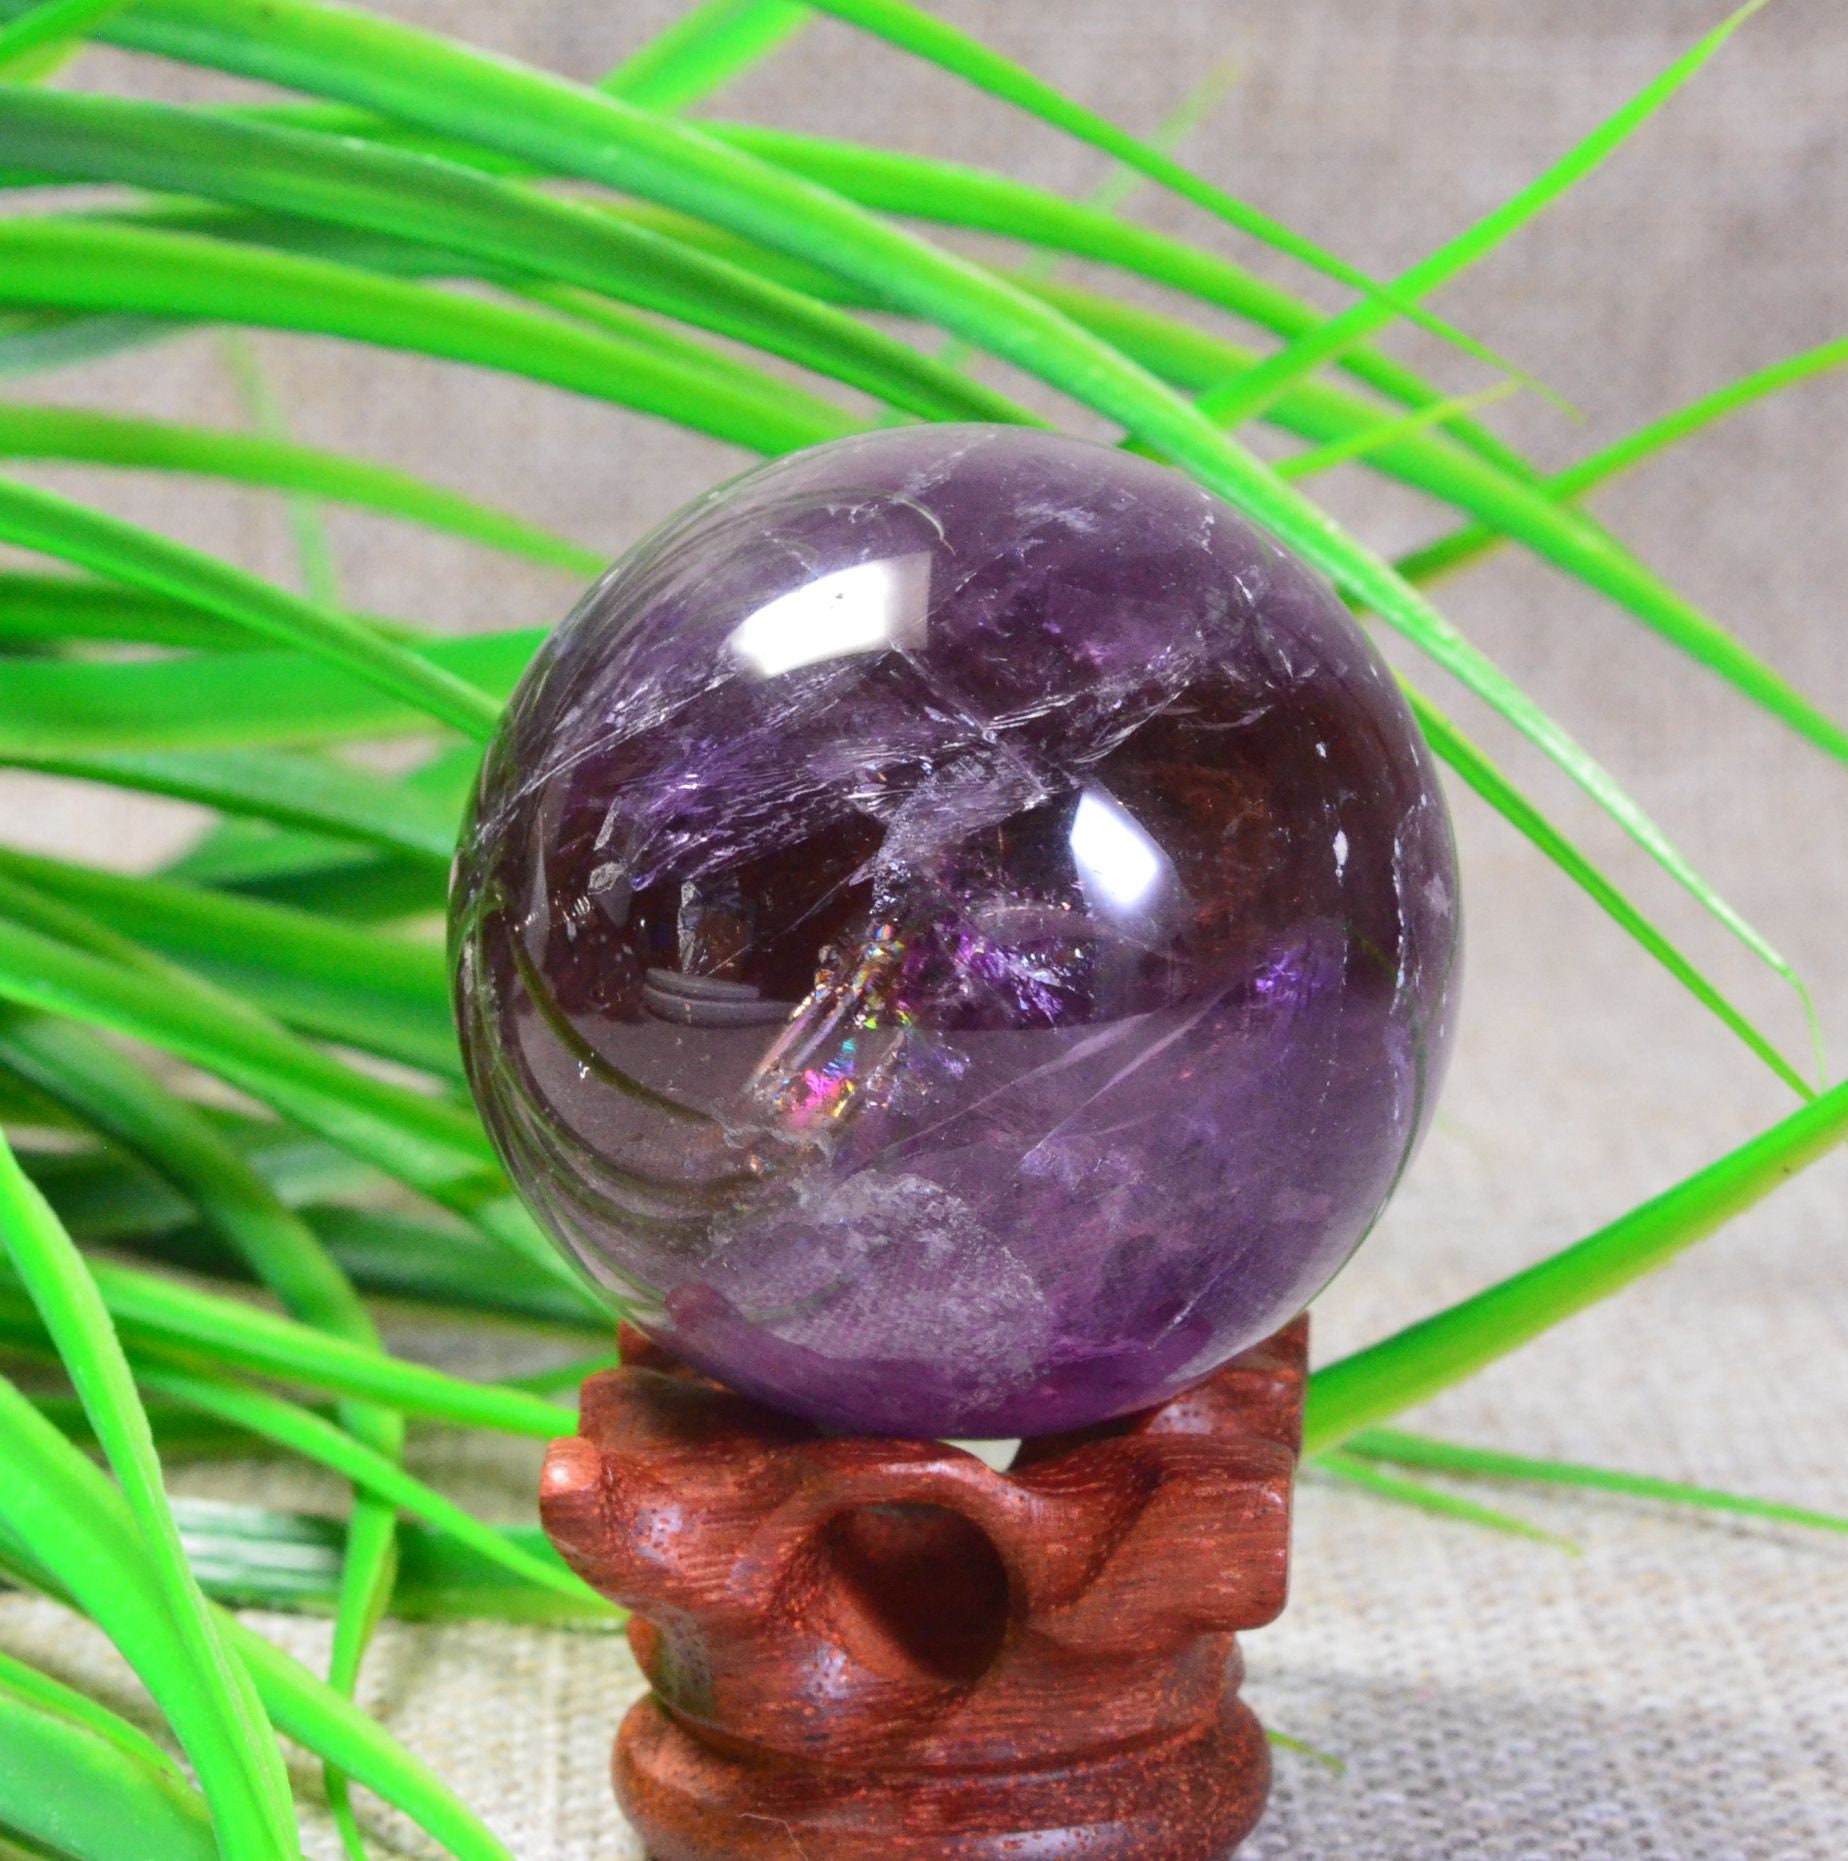  ANTWAX Natural Crystals Quartz Amethyst Sphere Ball Reiki  Stones Room Home Office Aquarium Decoration Accessories Gemstone Beautiful  YUANNYIN (Size : 7-7.5cm) : Home & Kitchen